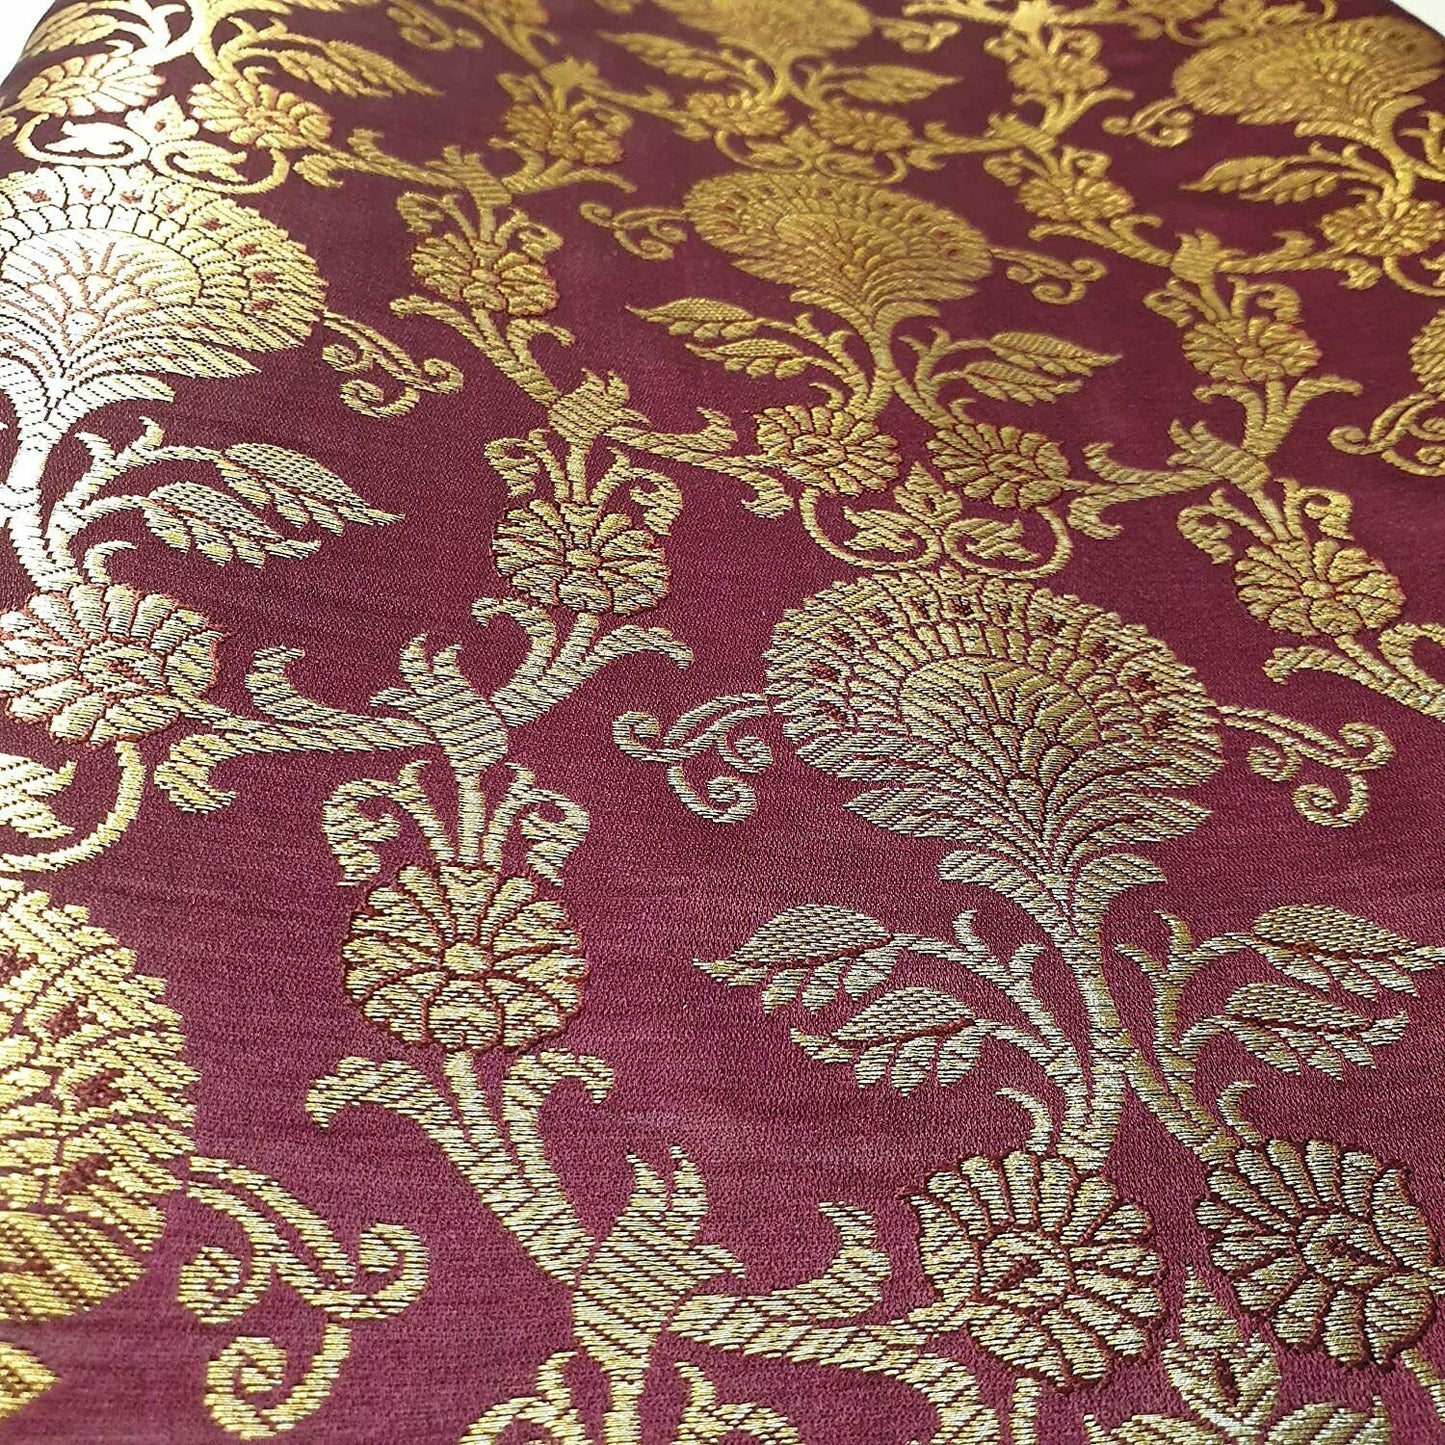 New Prints Ornamental Floral Gold Metallic Print Indian Banarasi Brocade Fabric (Wine)